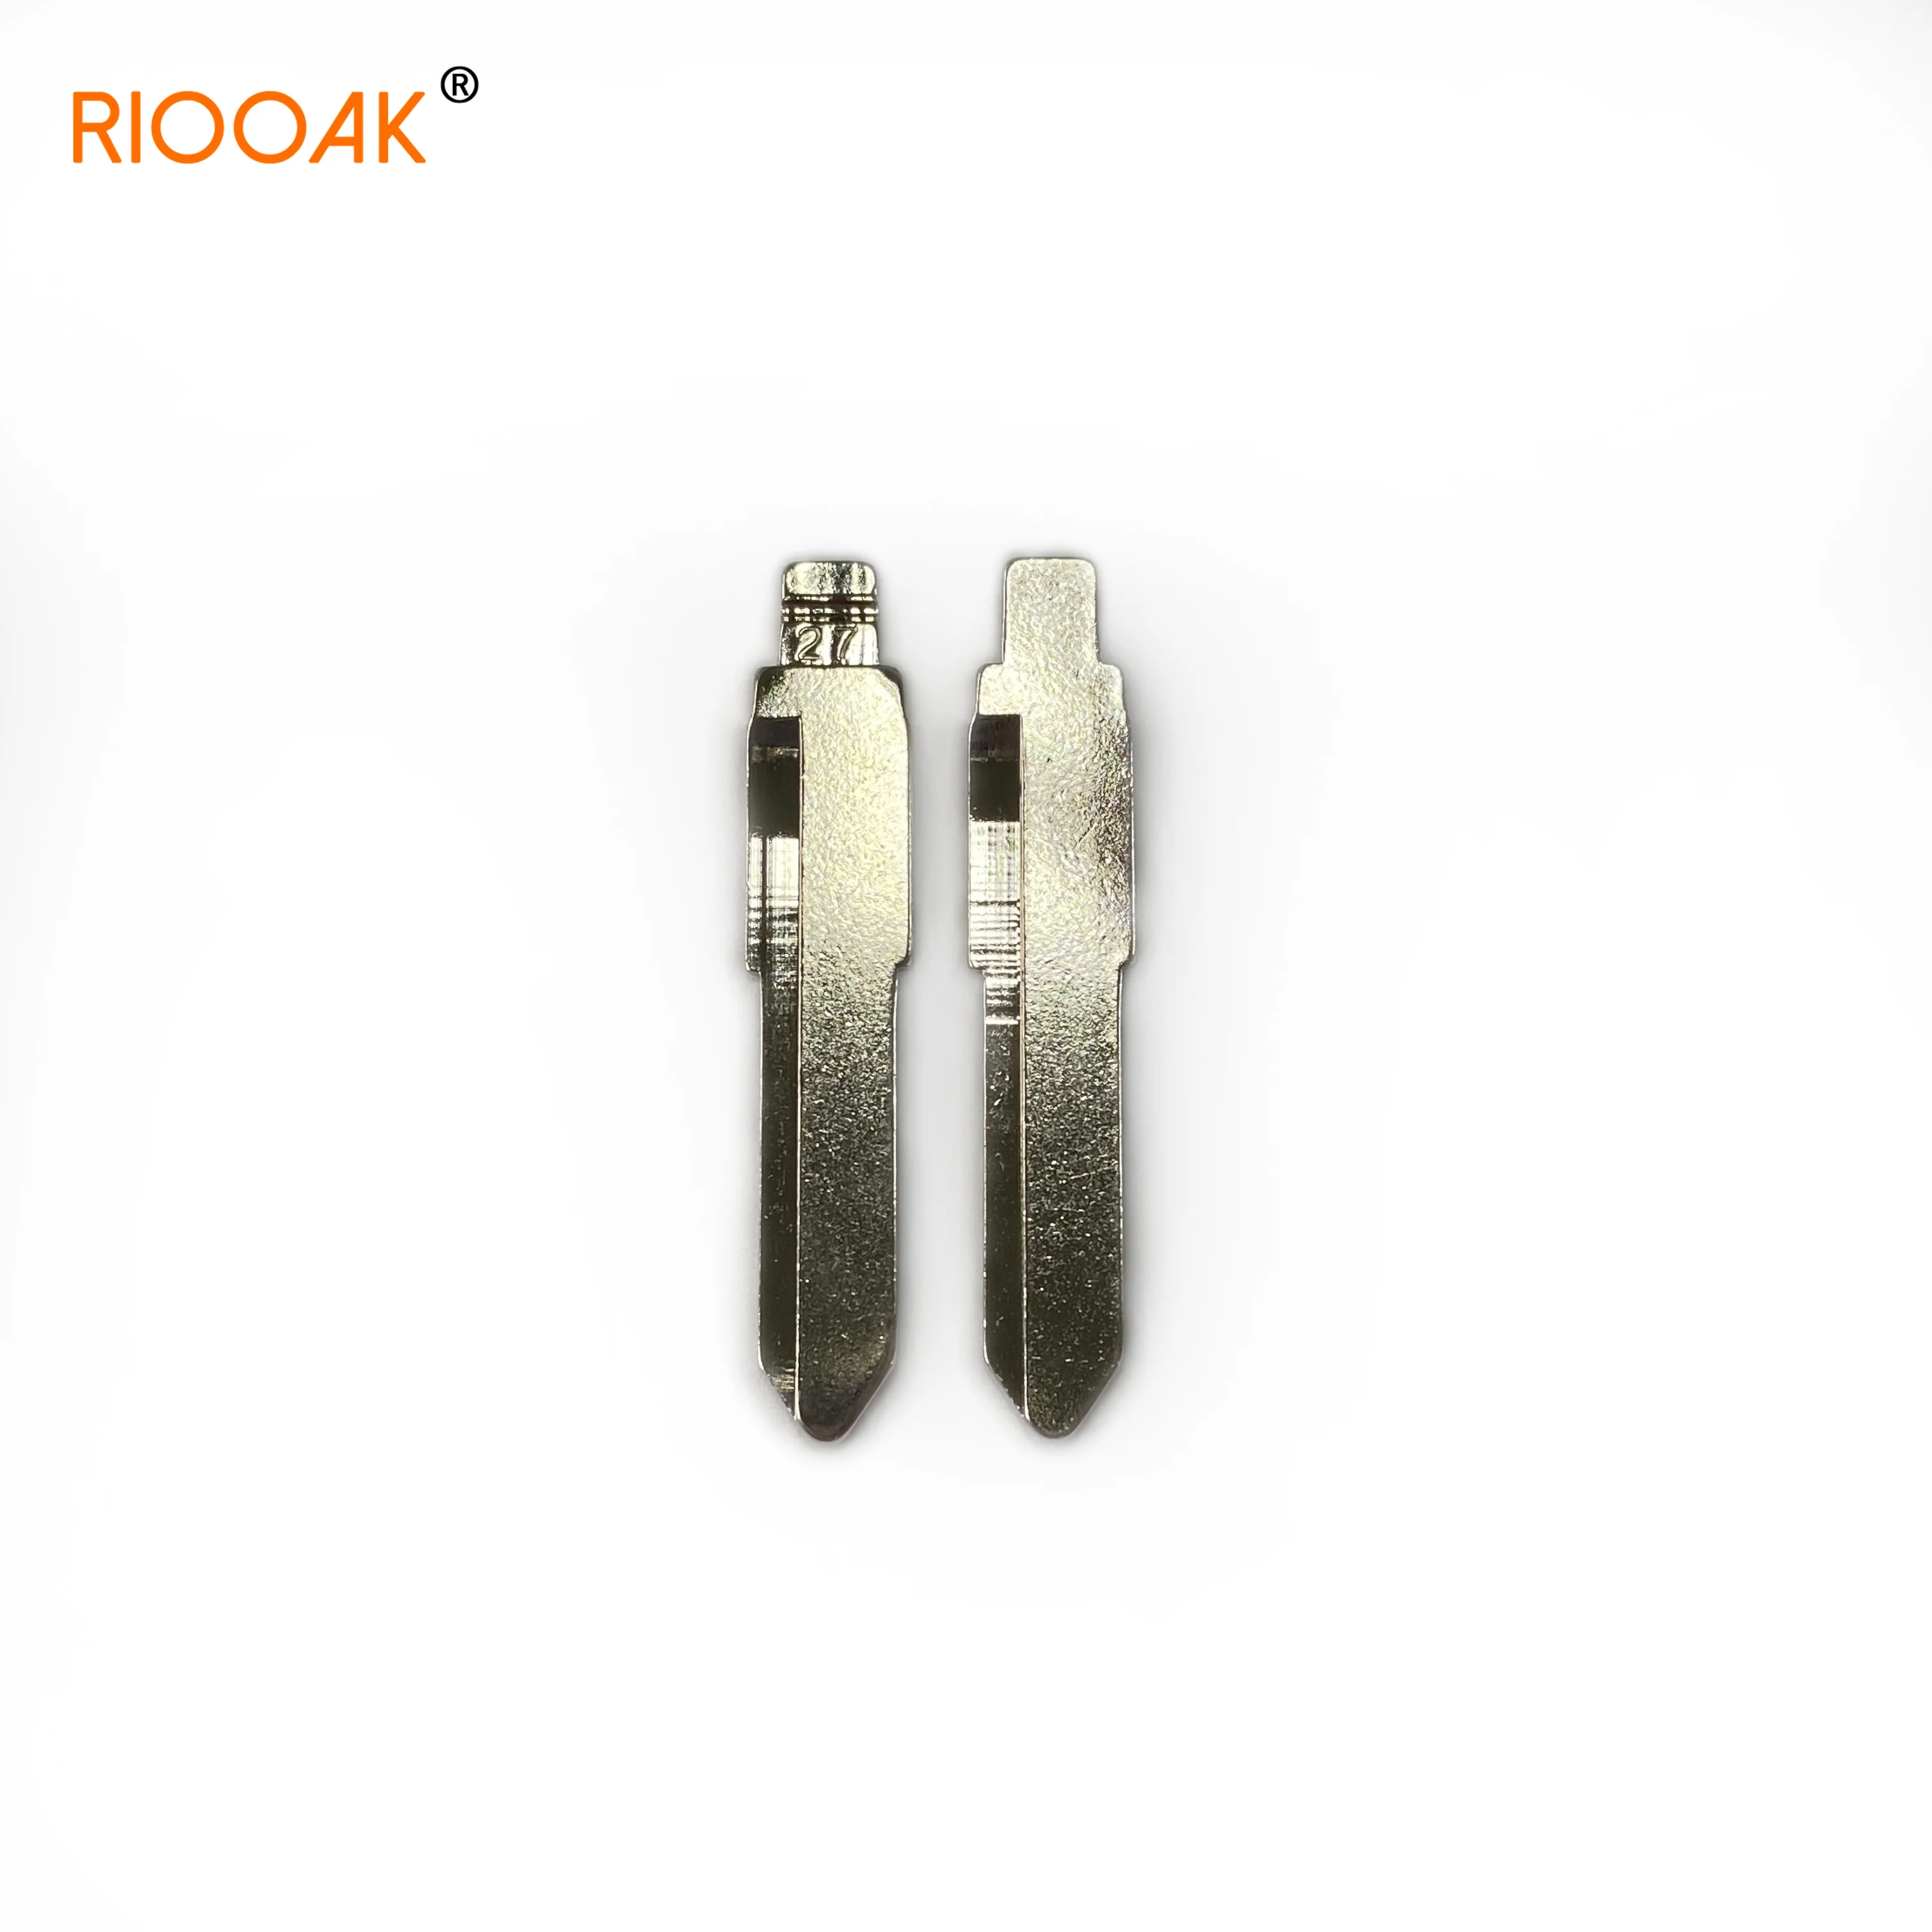 Riooak 10 Stks/partij #27 Lishi MAZ24 Metalen Blank Ongecensureerd Flip Kd/Vvdi Remote Key Blade Voor Mazda M2 m3 M5 M6 M8 Auto Vervangende Onderdelen